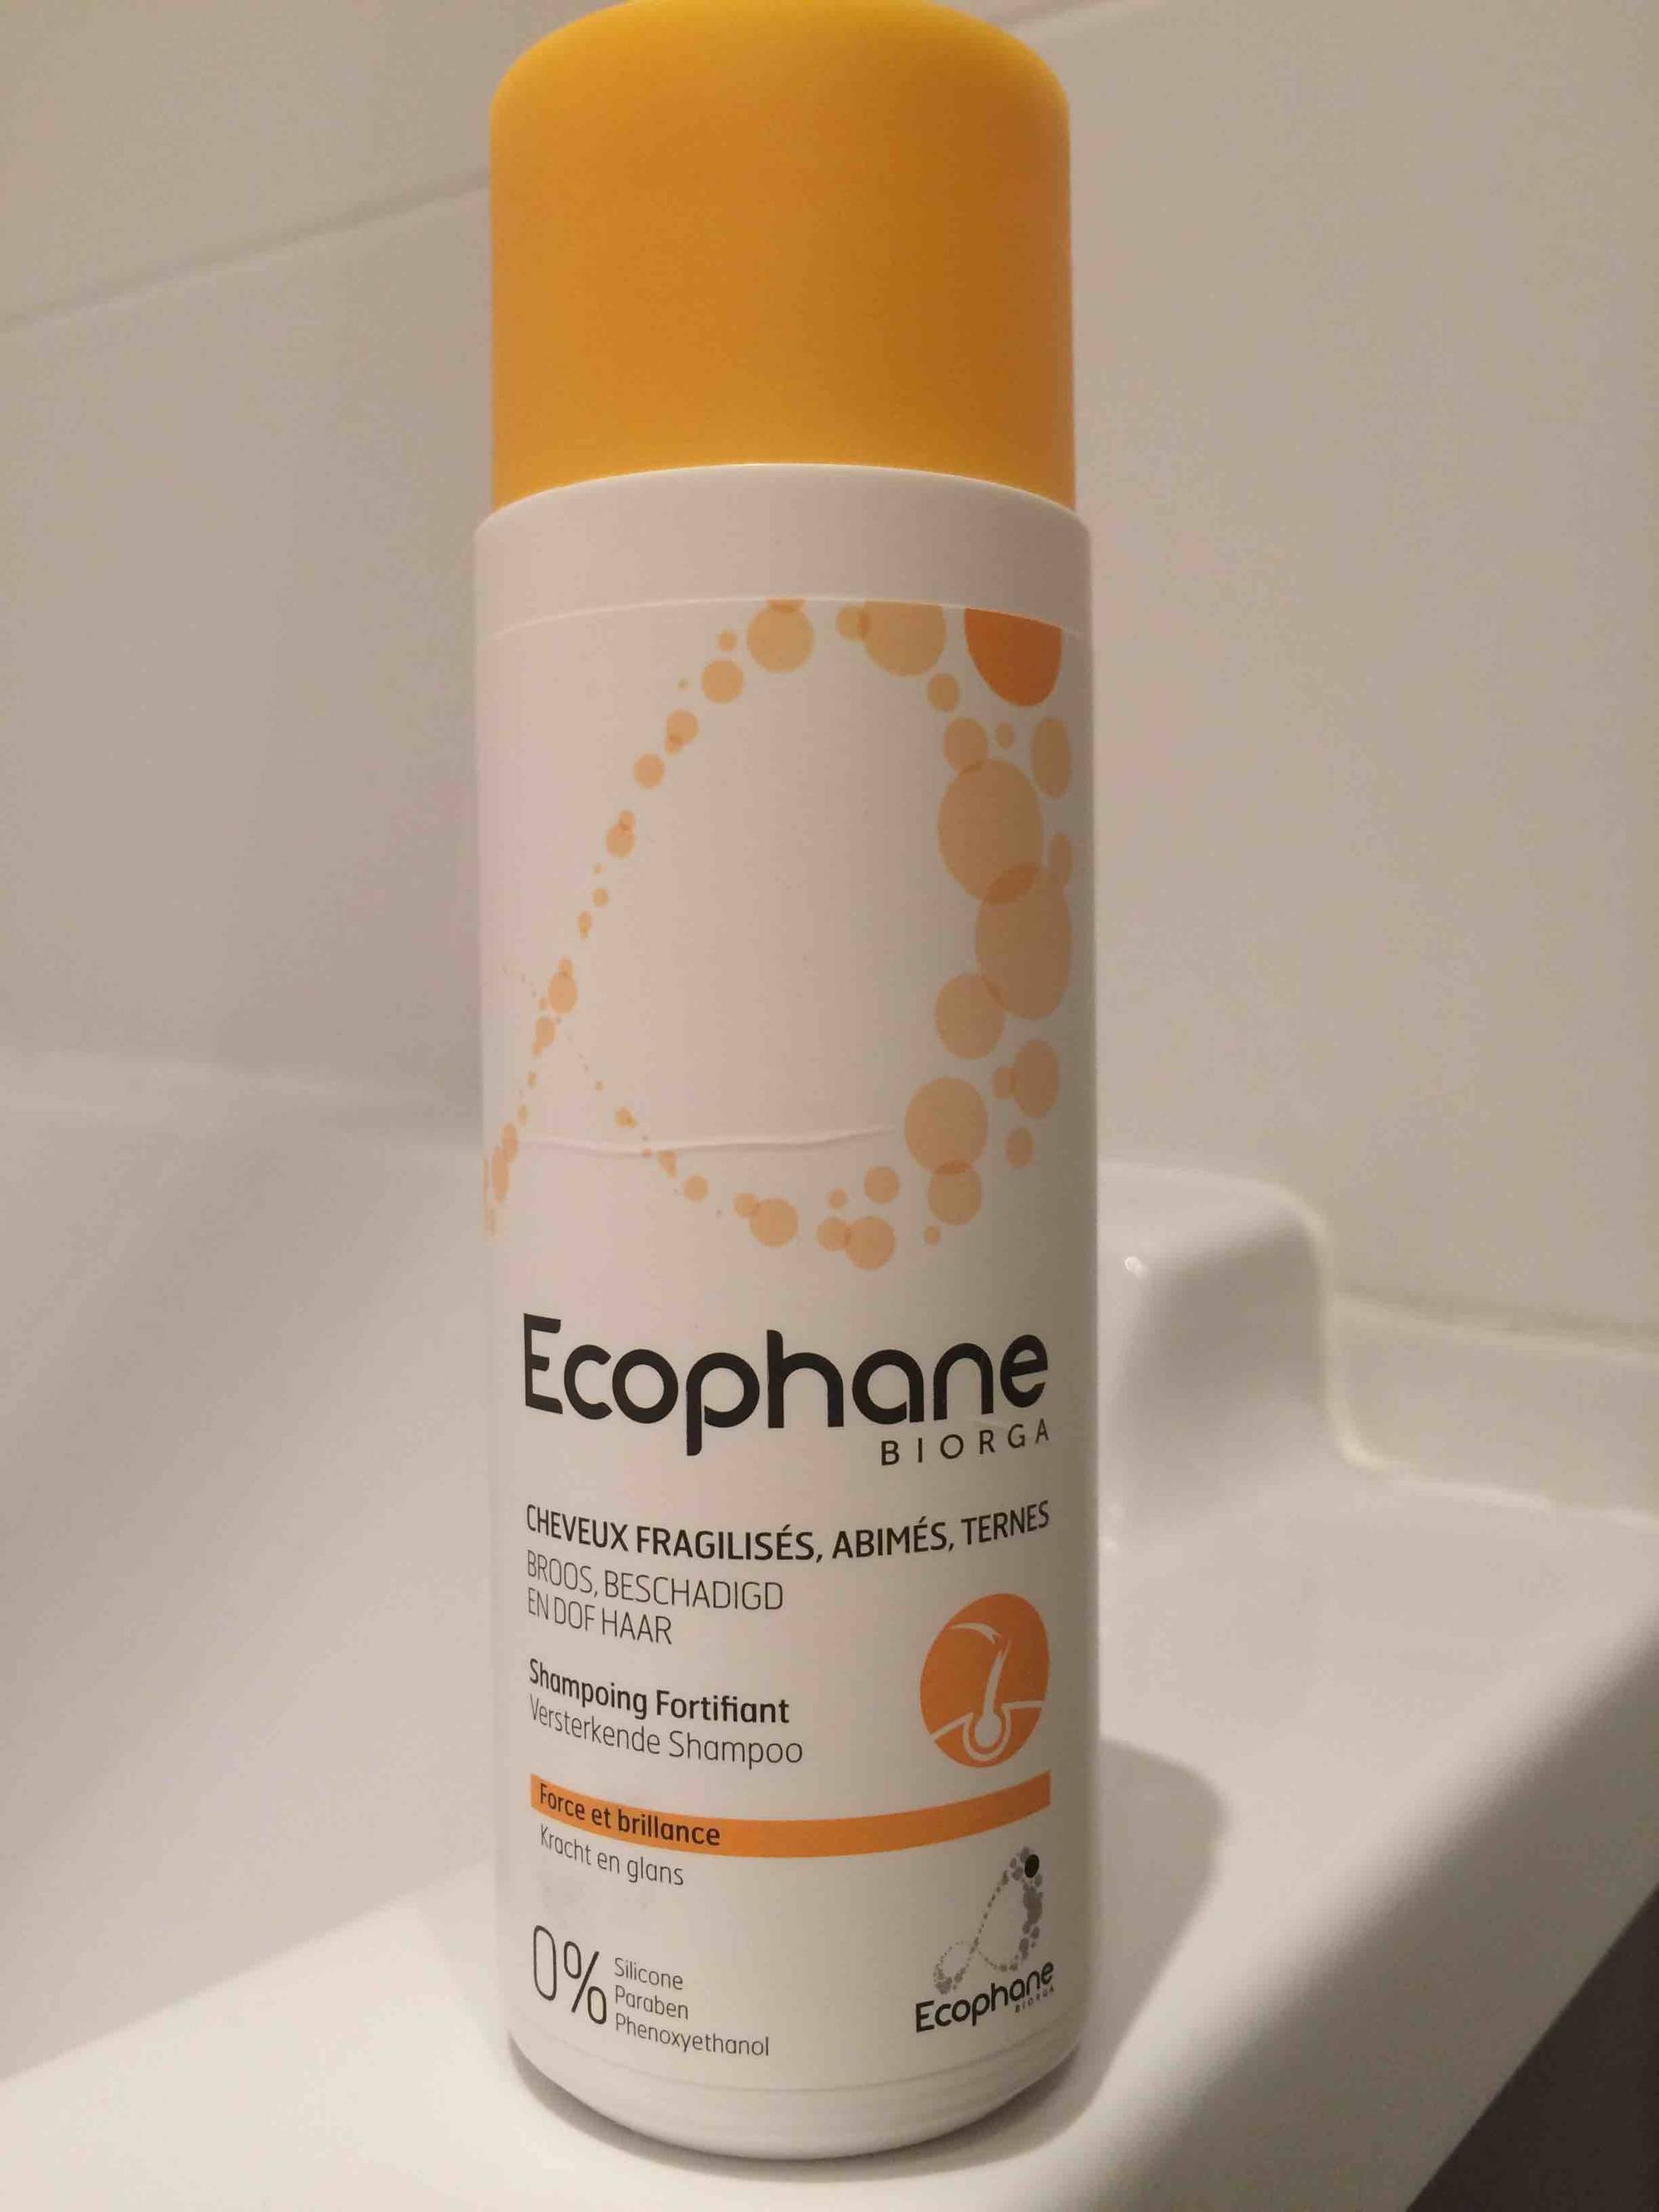 BIORGA - Ecophane - Shampoing fortifiant